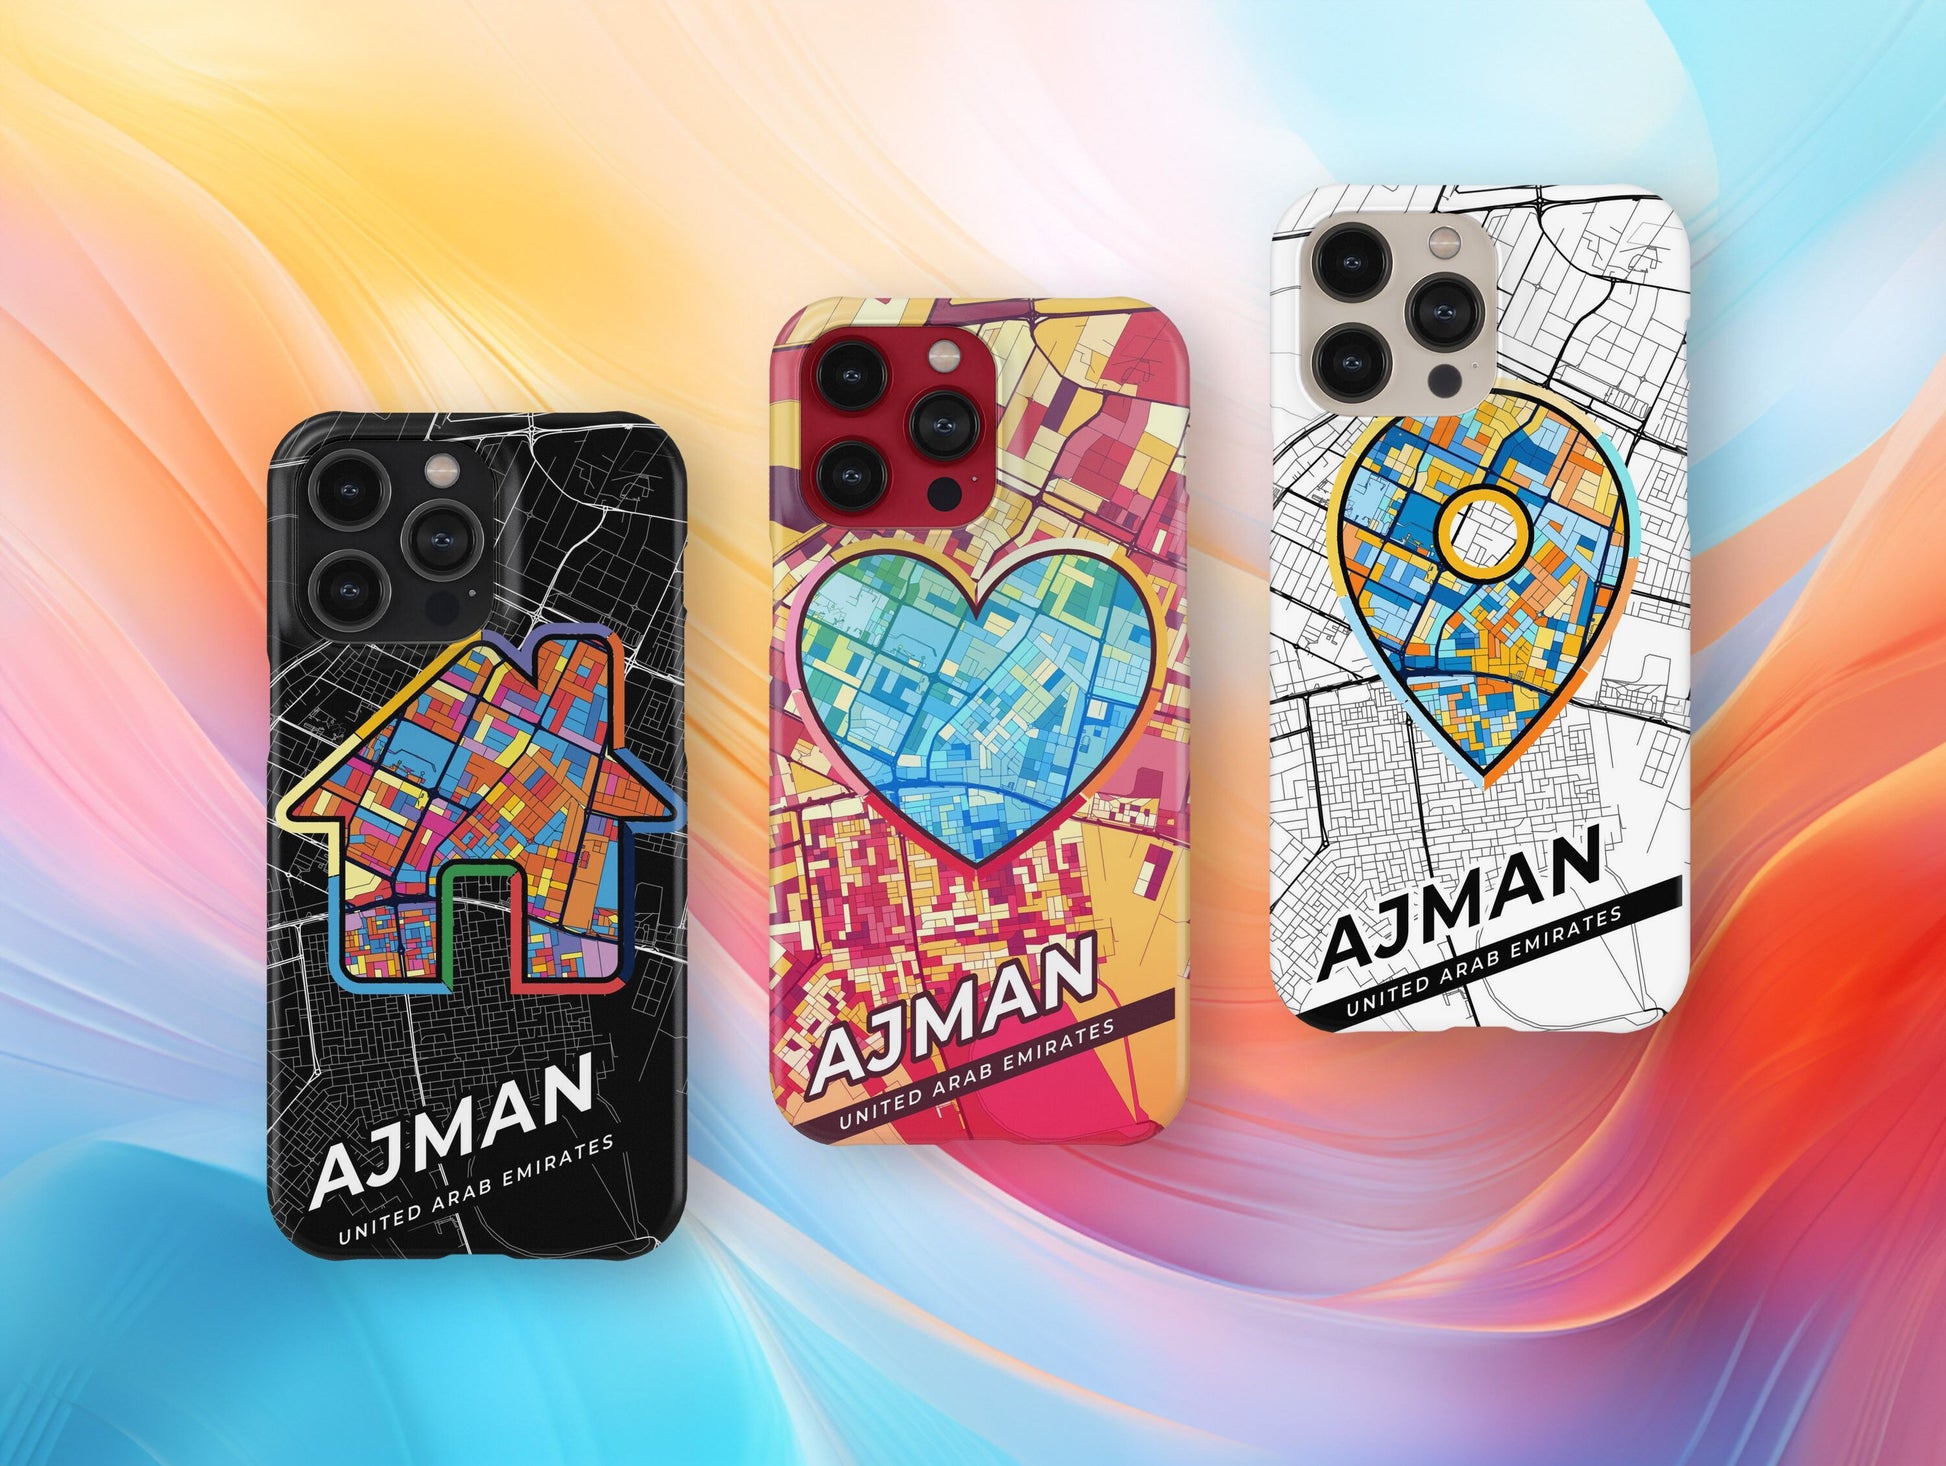 Ajman United Arab Emirates slim phone case with colorful icon. Birthday, wedding or housewarming gift. Couple match cases.